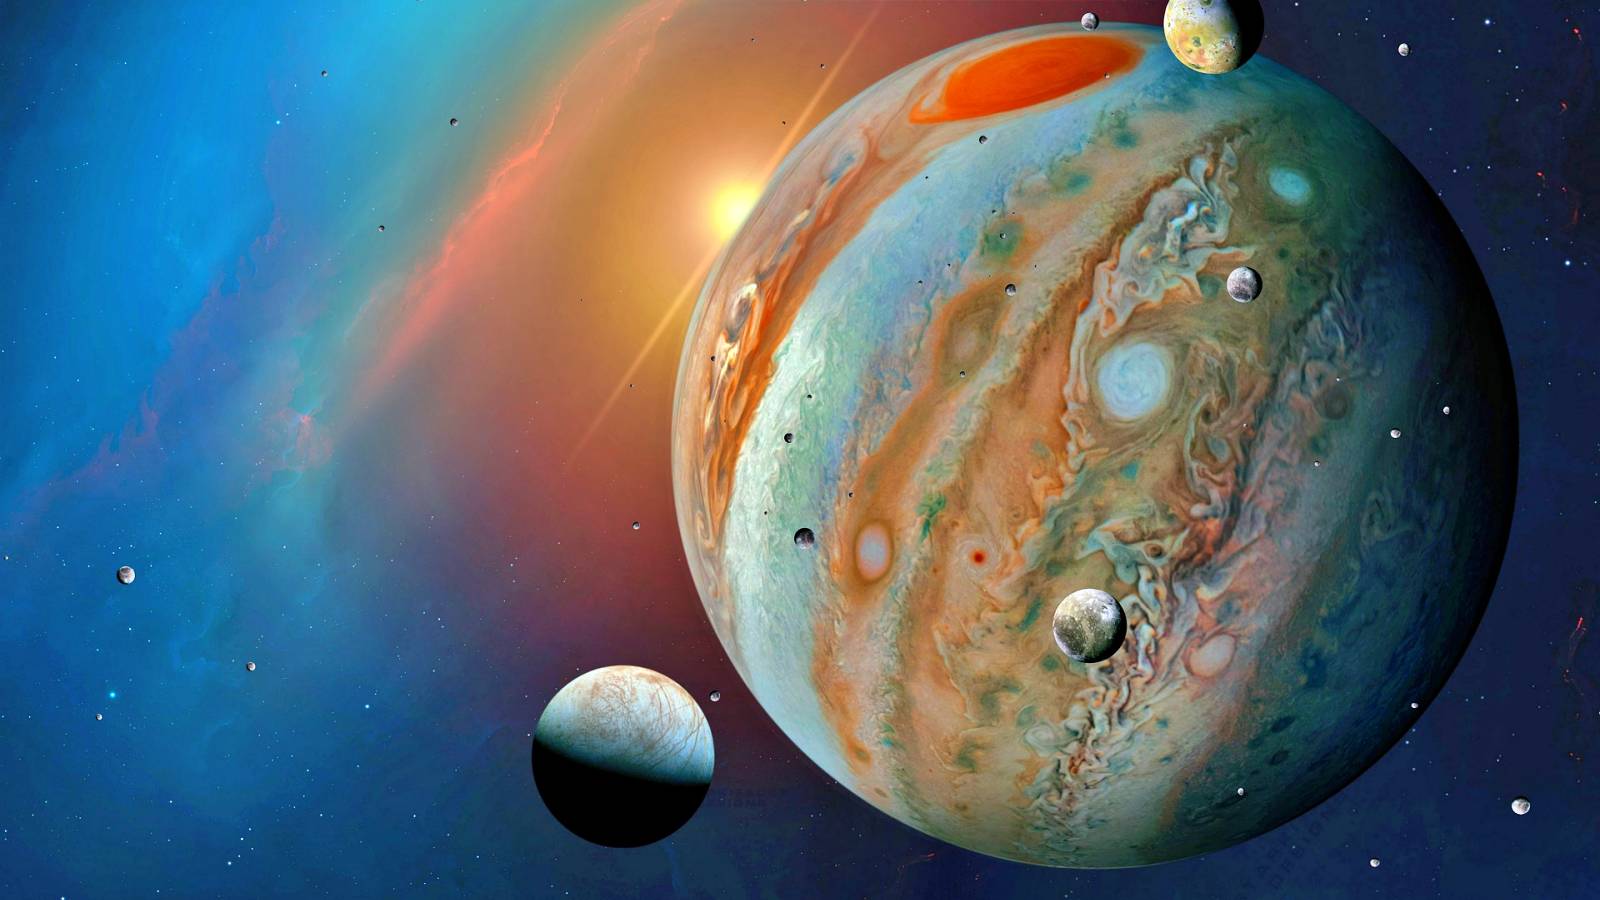 Descoperirea Planeta Jupiter UIMIT Oamenii Stiinta